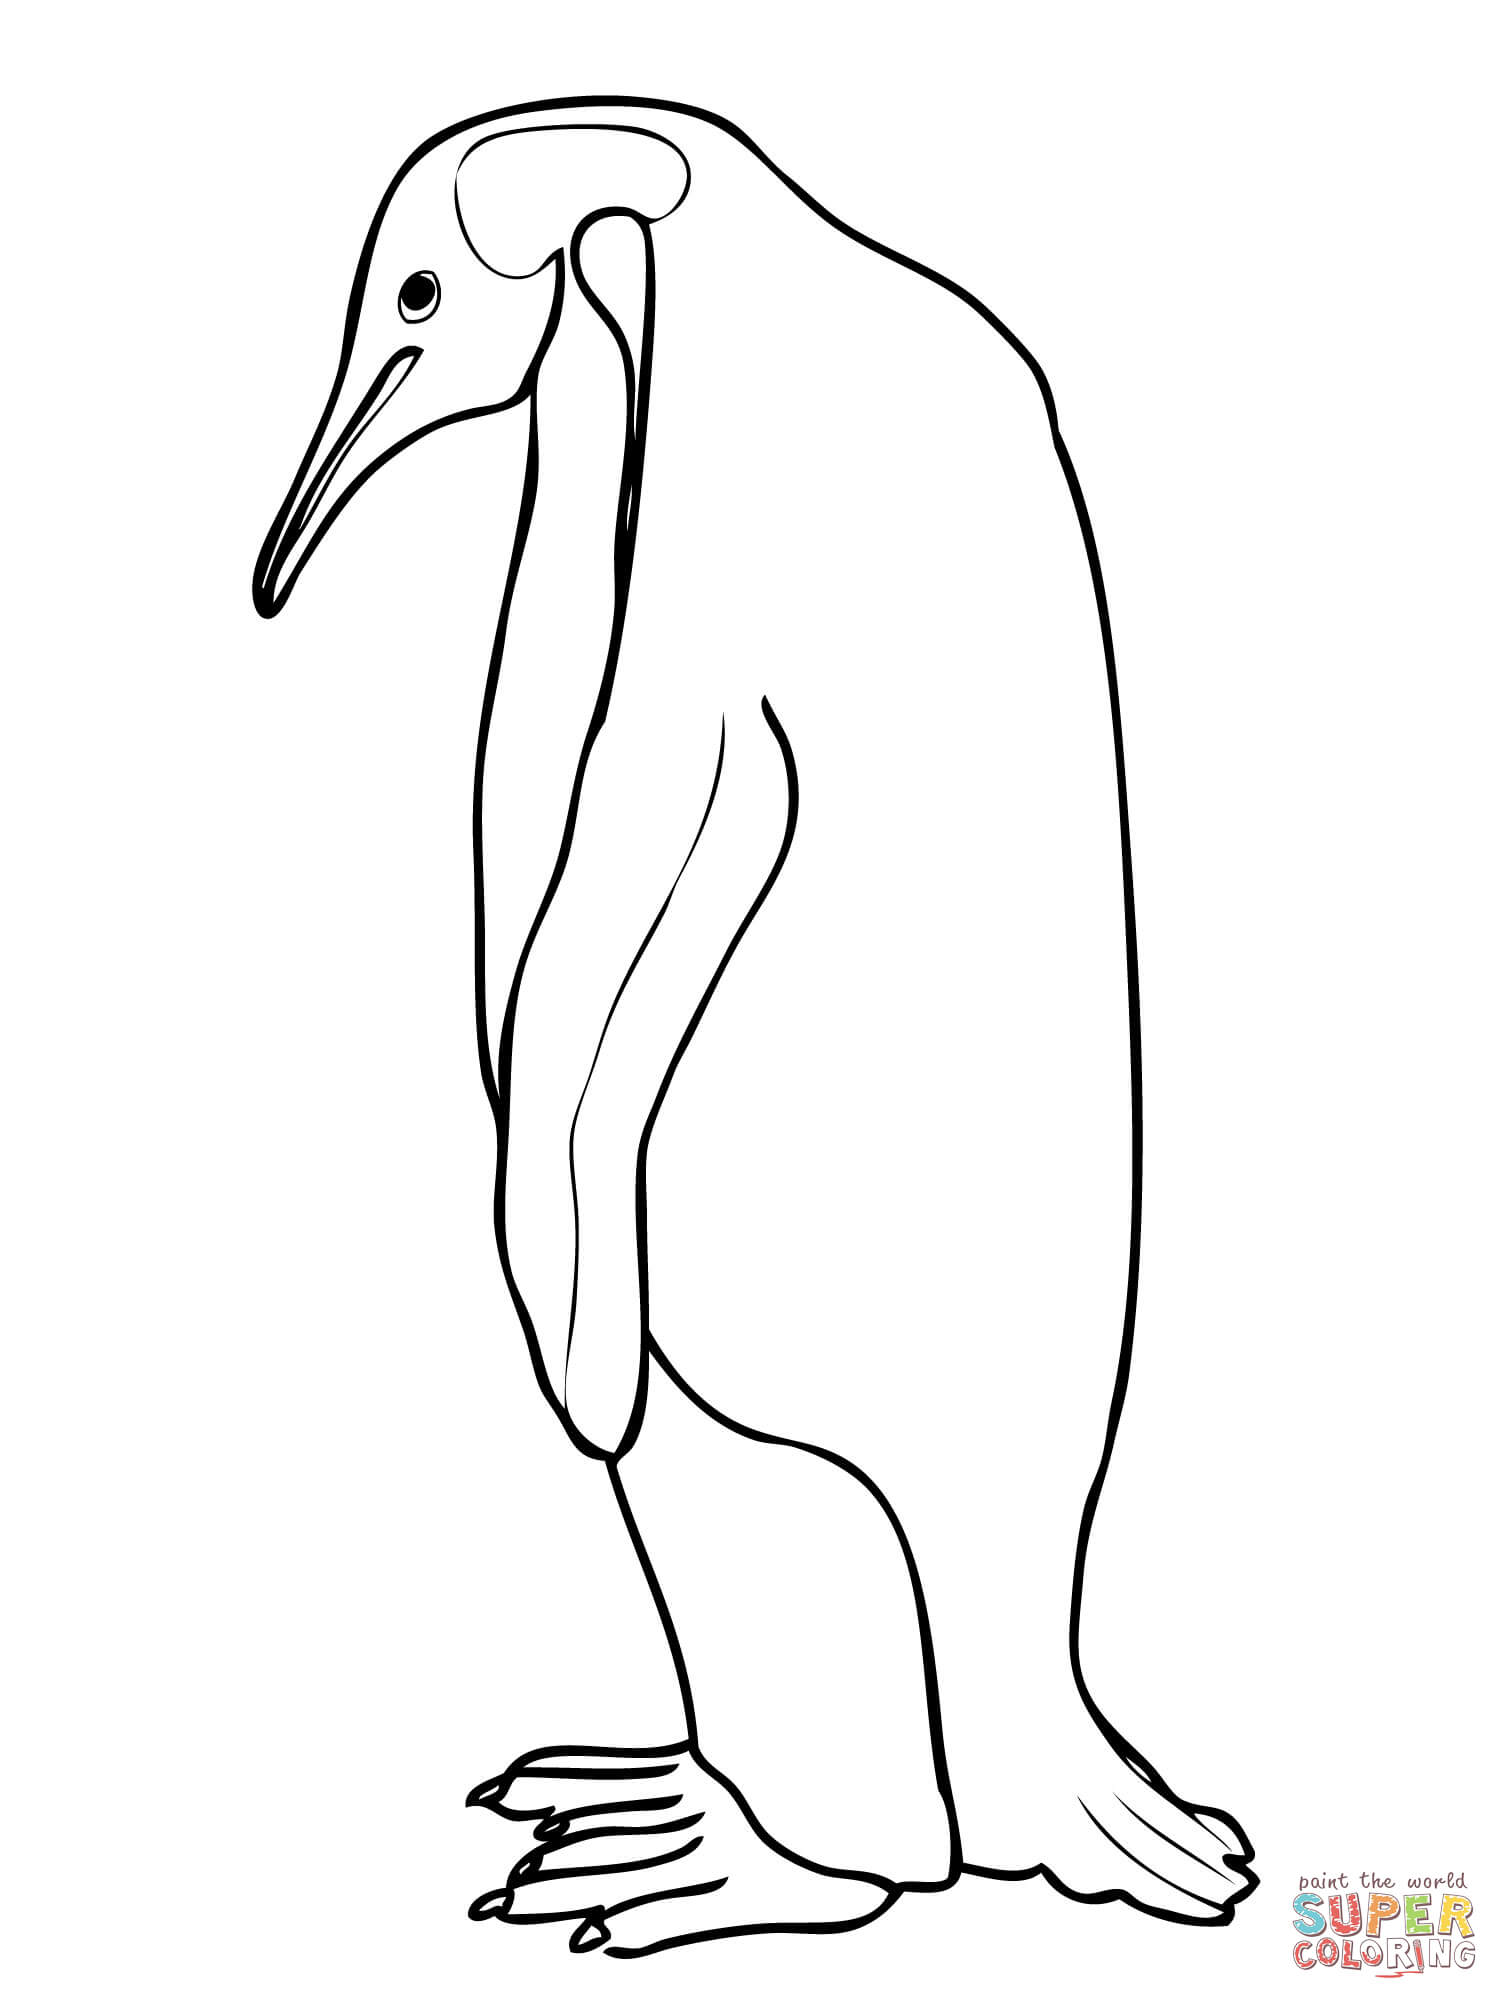 Emperor Penguin Coloring Page | Free Printable Coloring ...